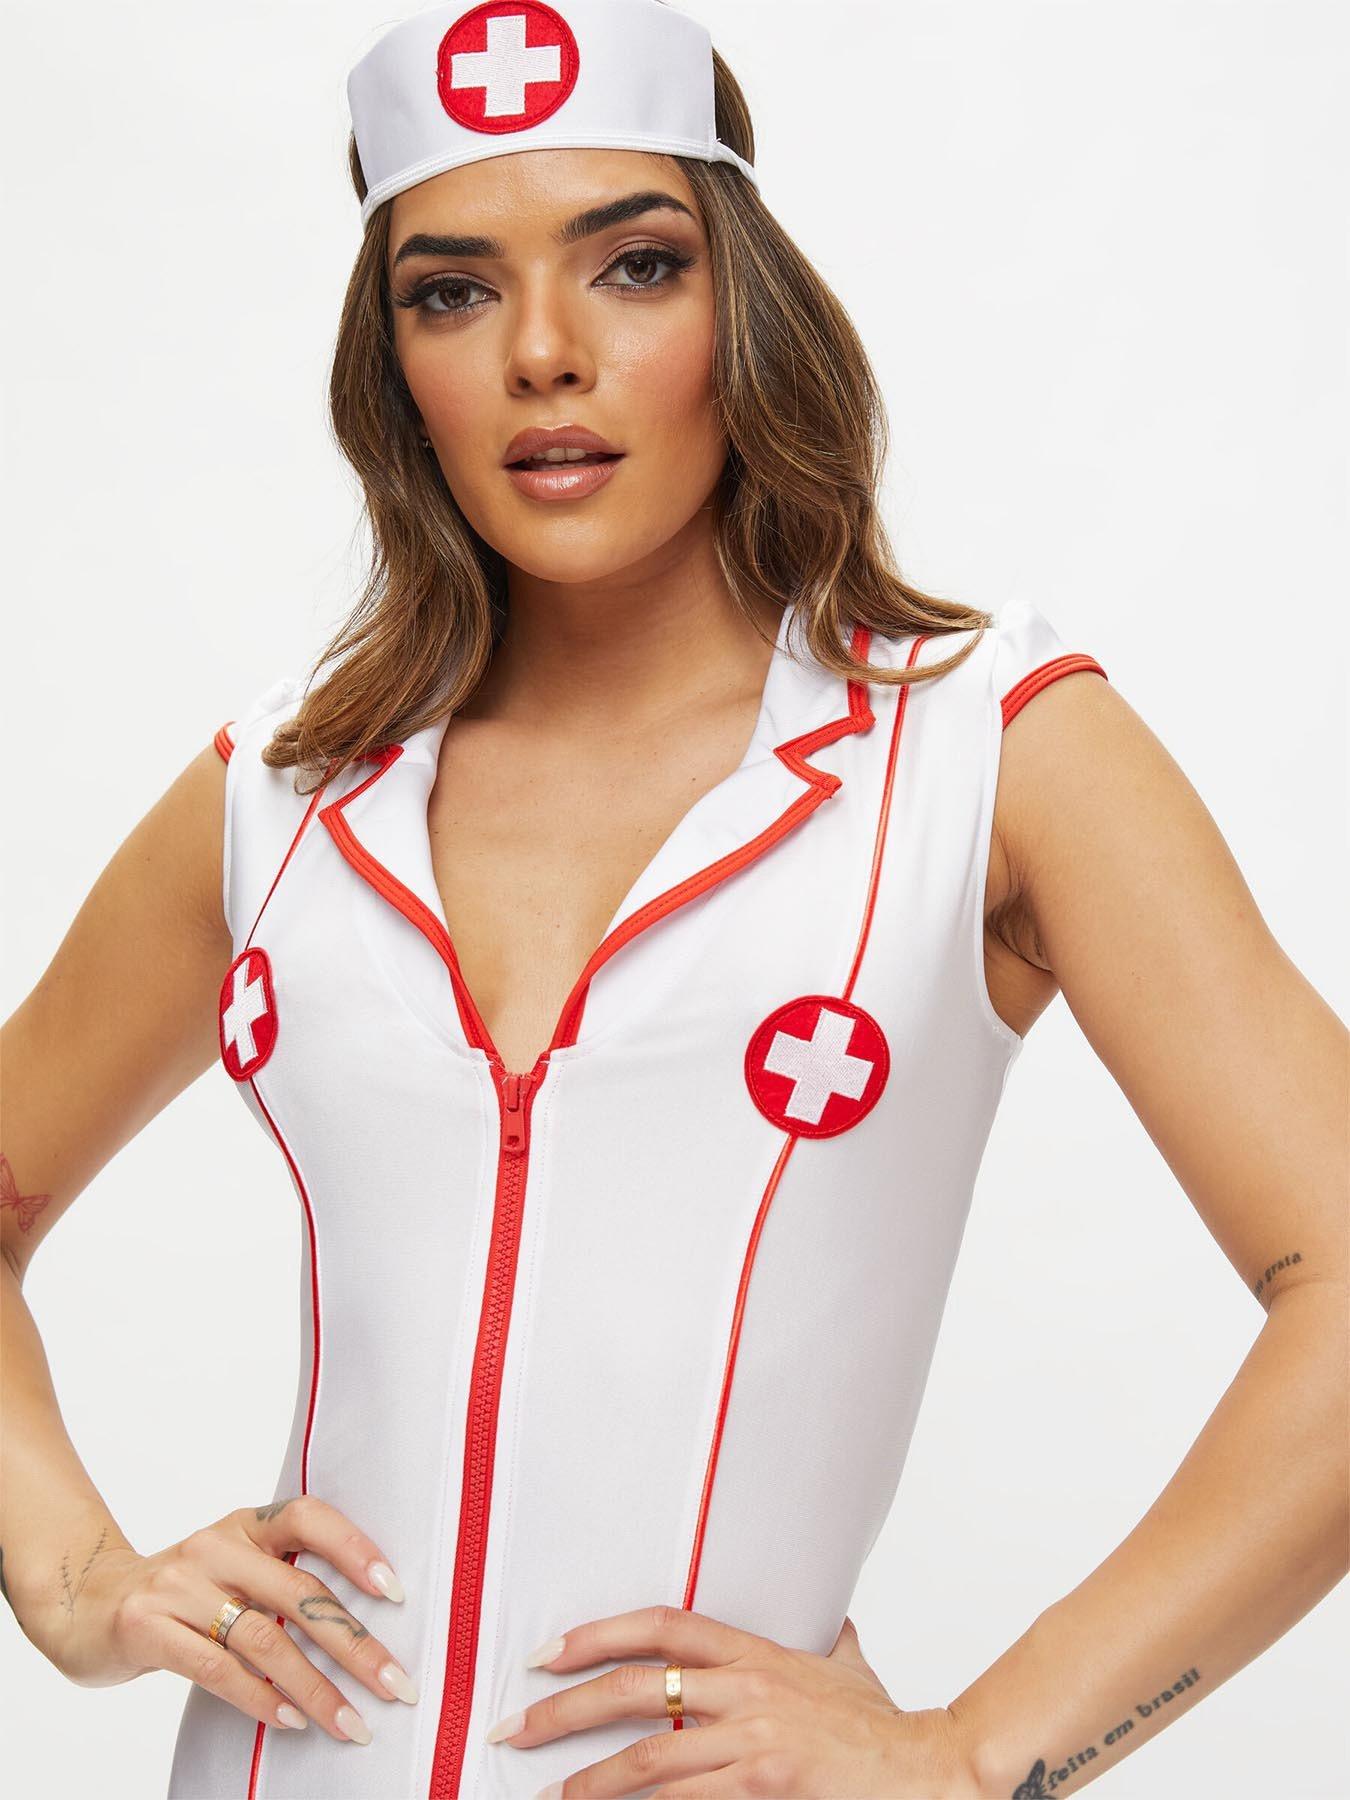 Nurse Lingerie Costume - Shop on Pinterest